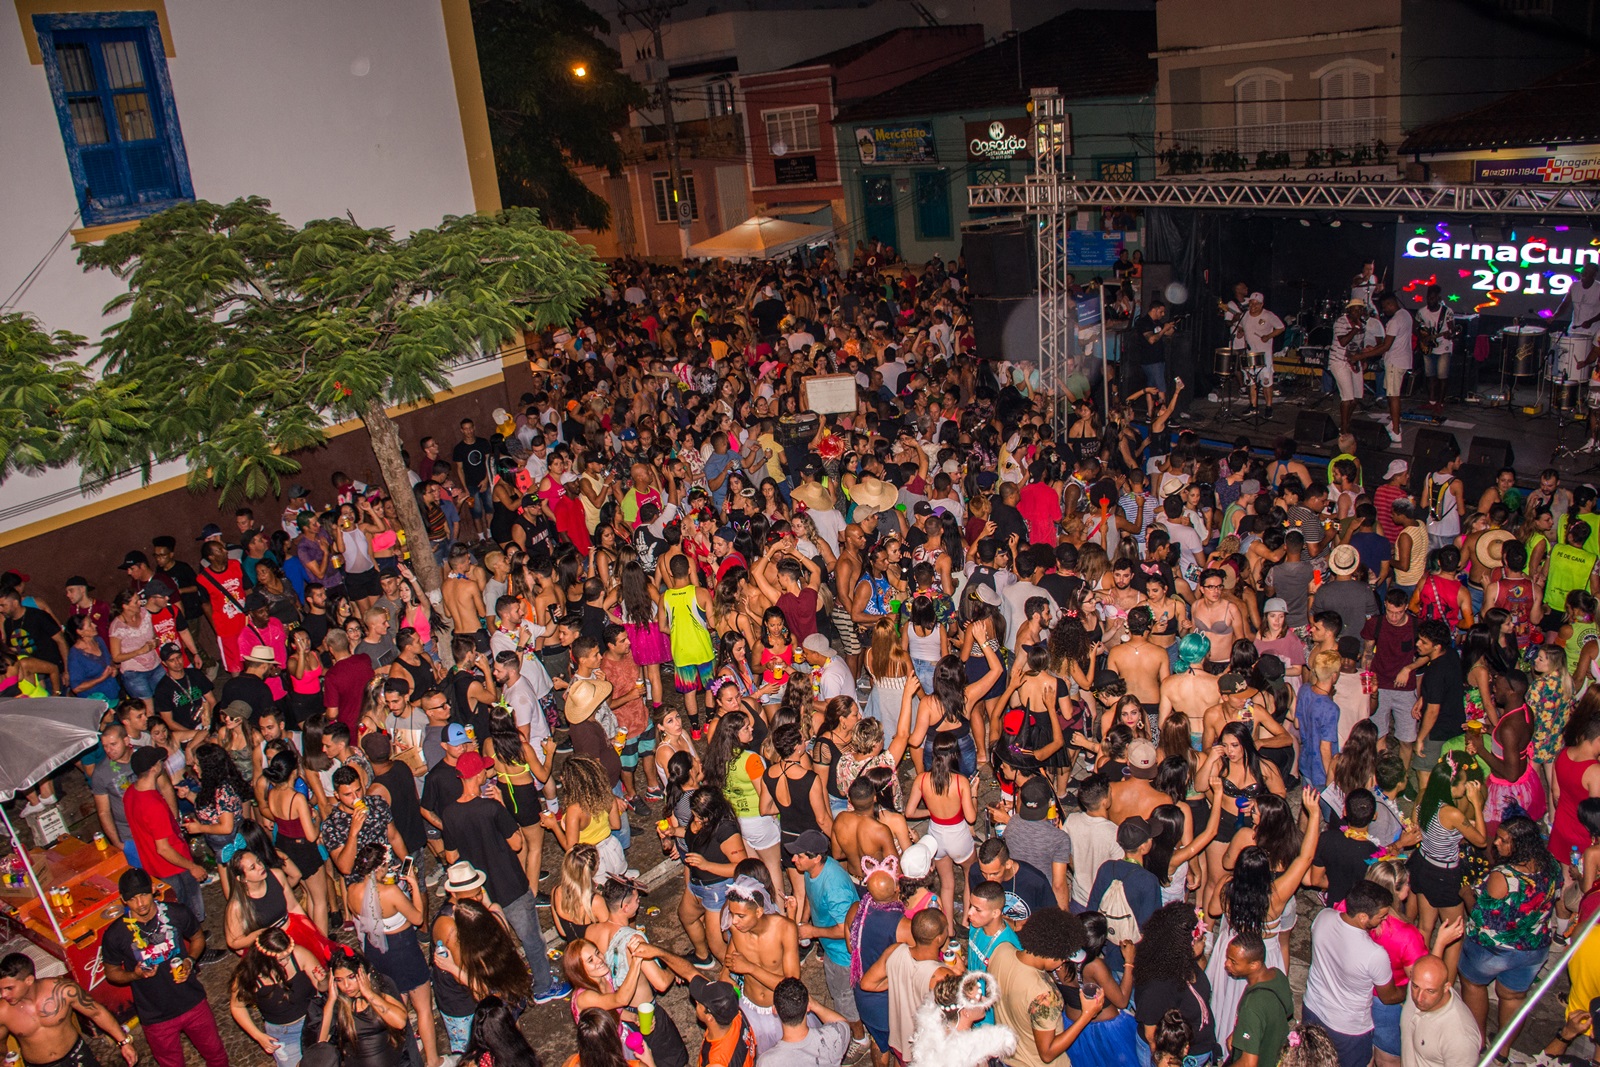 Carnaval de rua em Cunha embala foliões